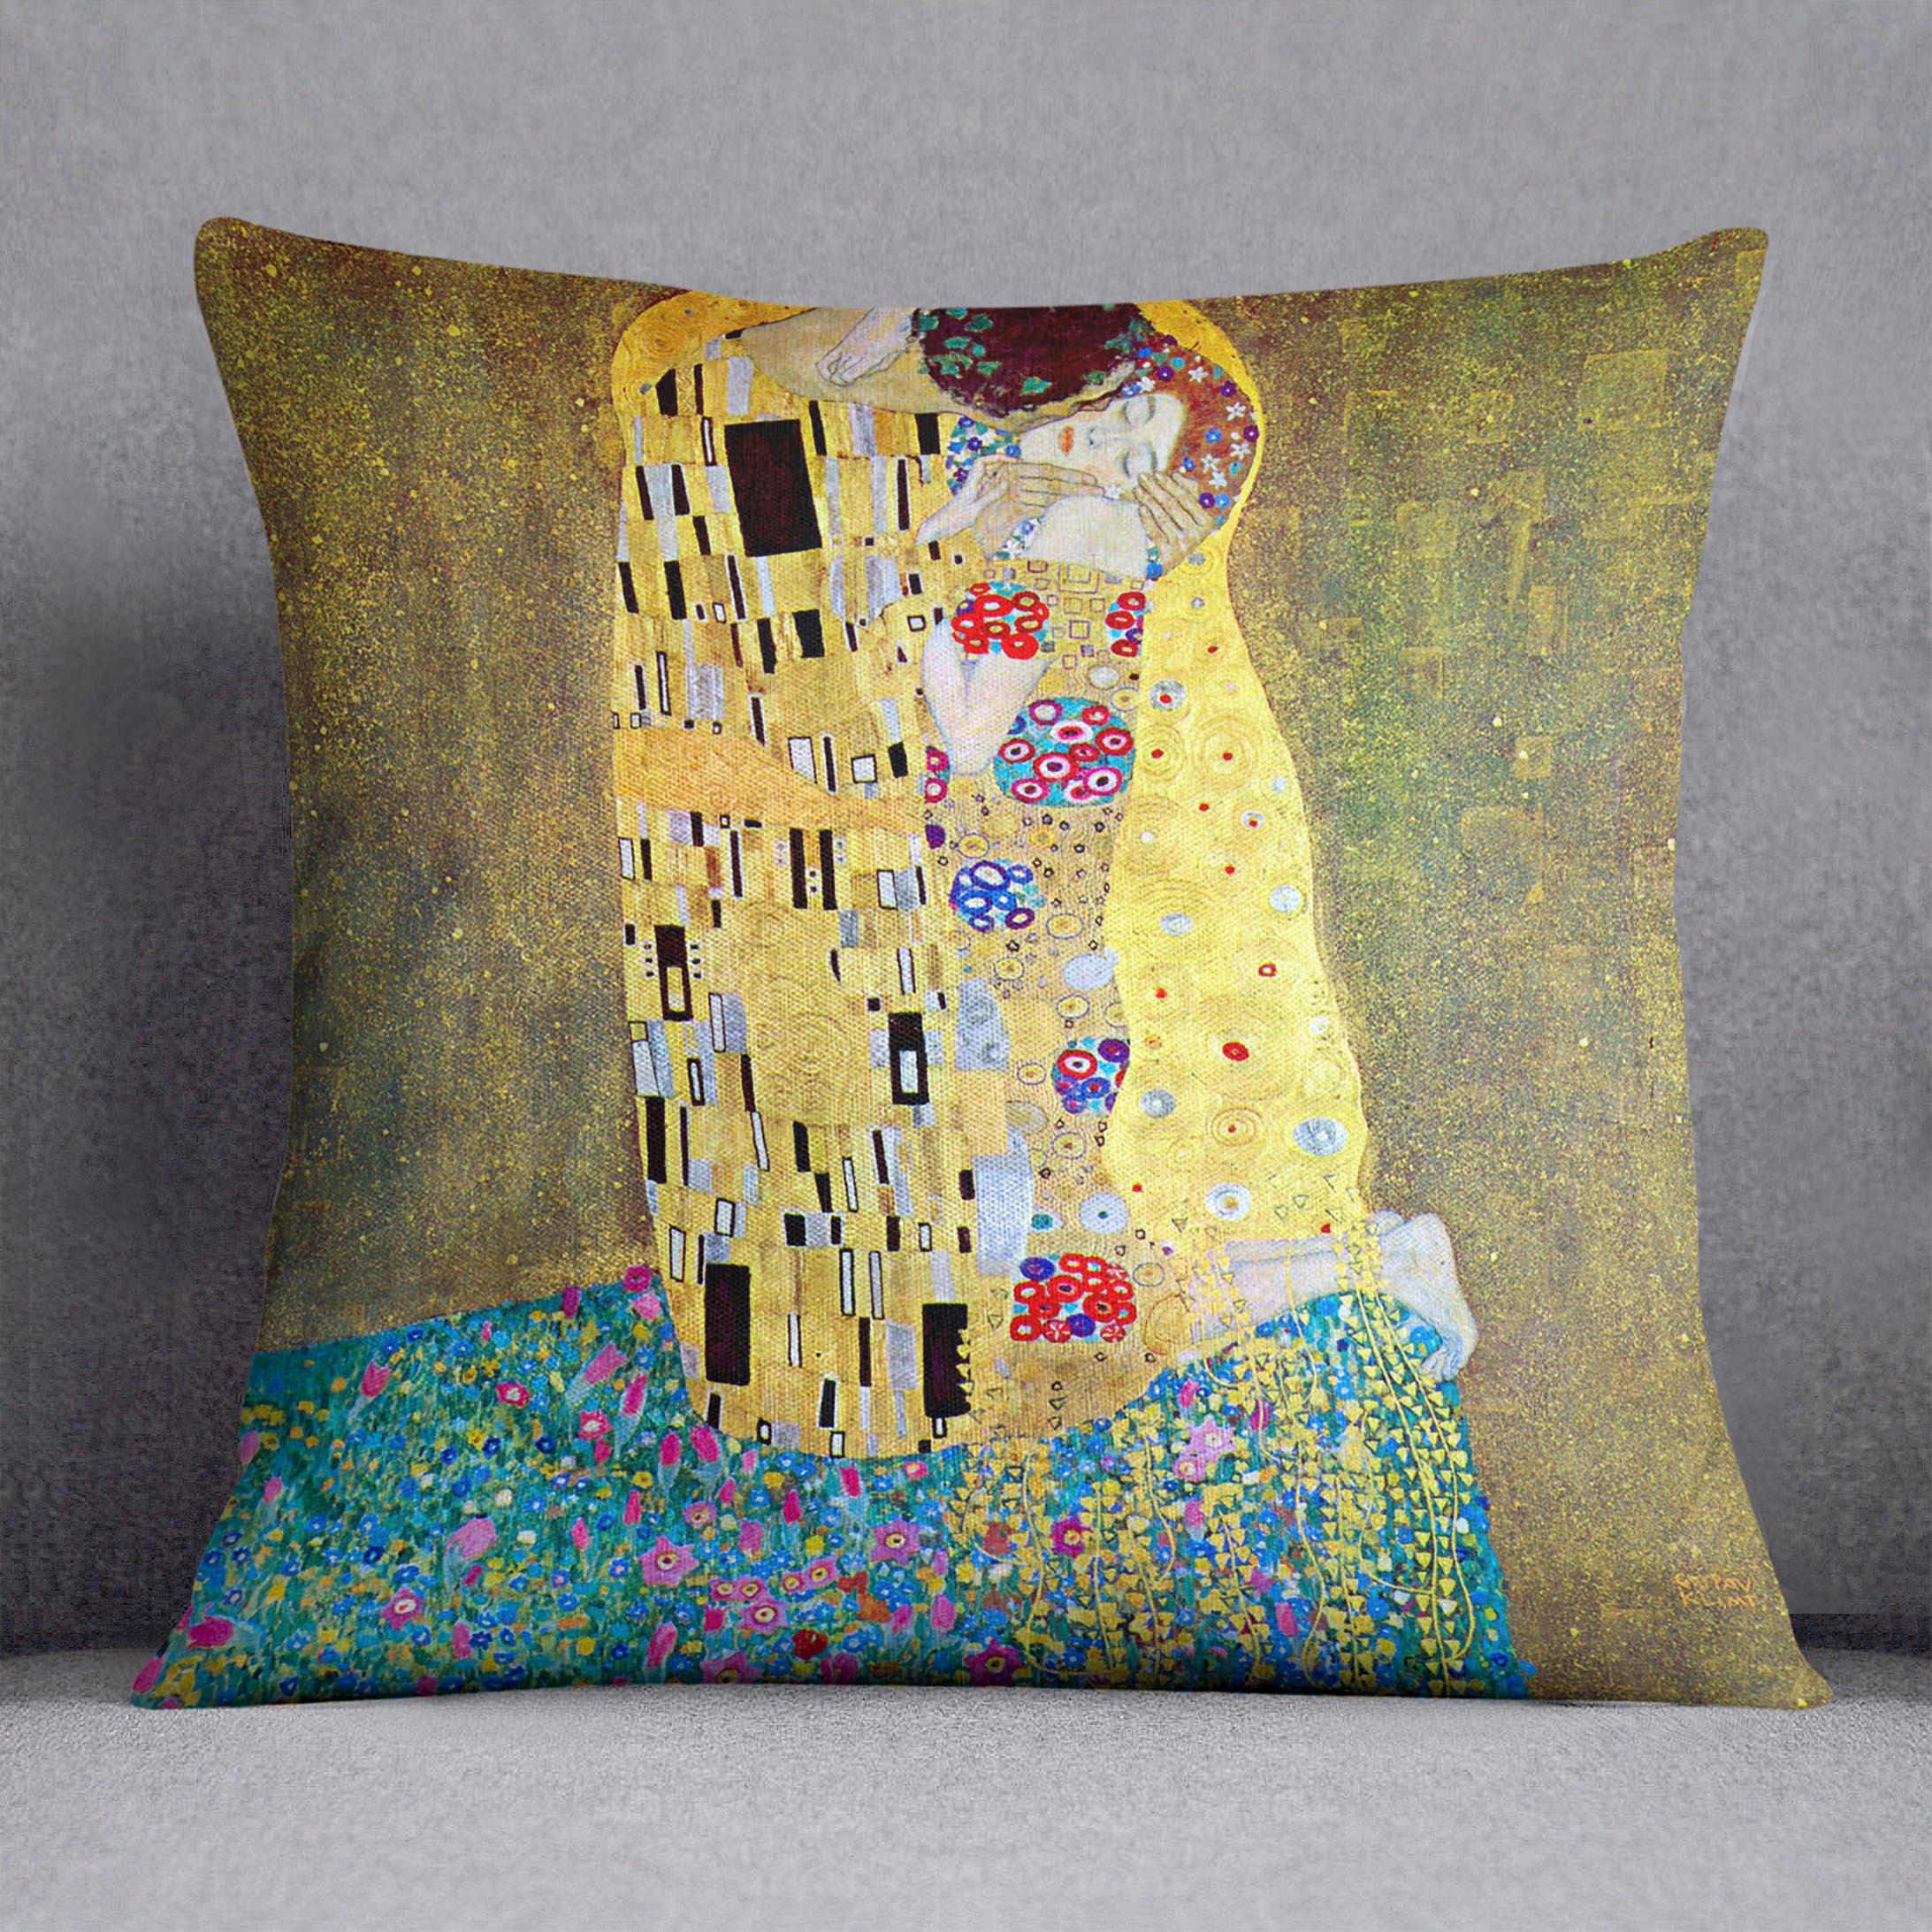 The Kiss 2 by Klimt Cushion